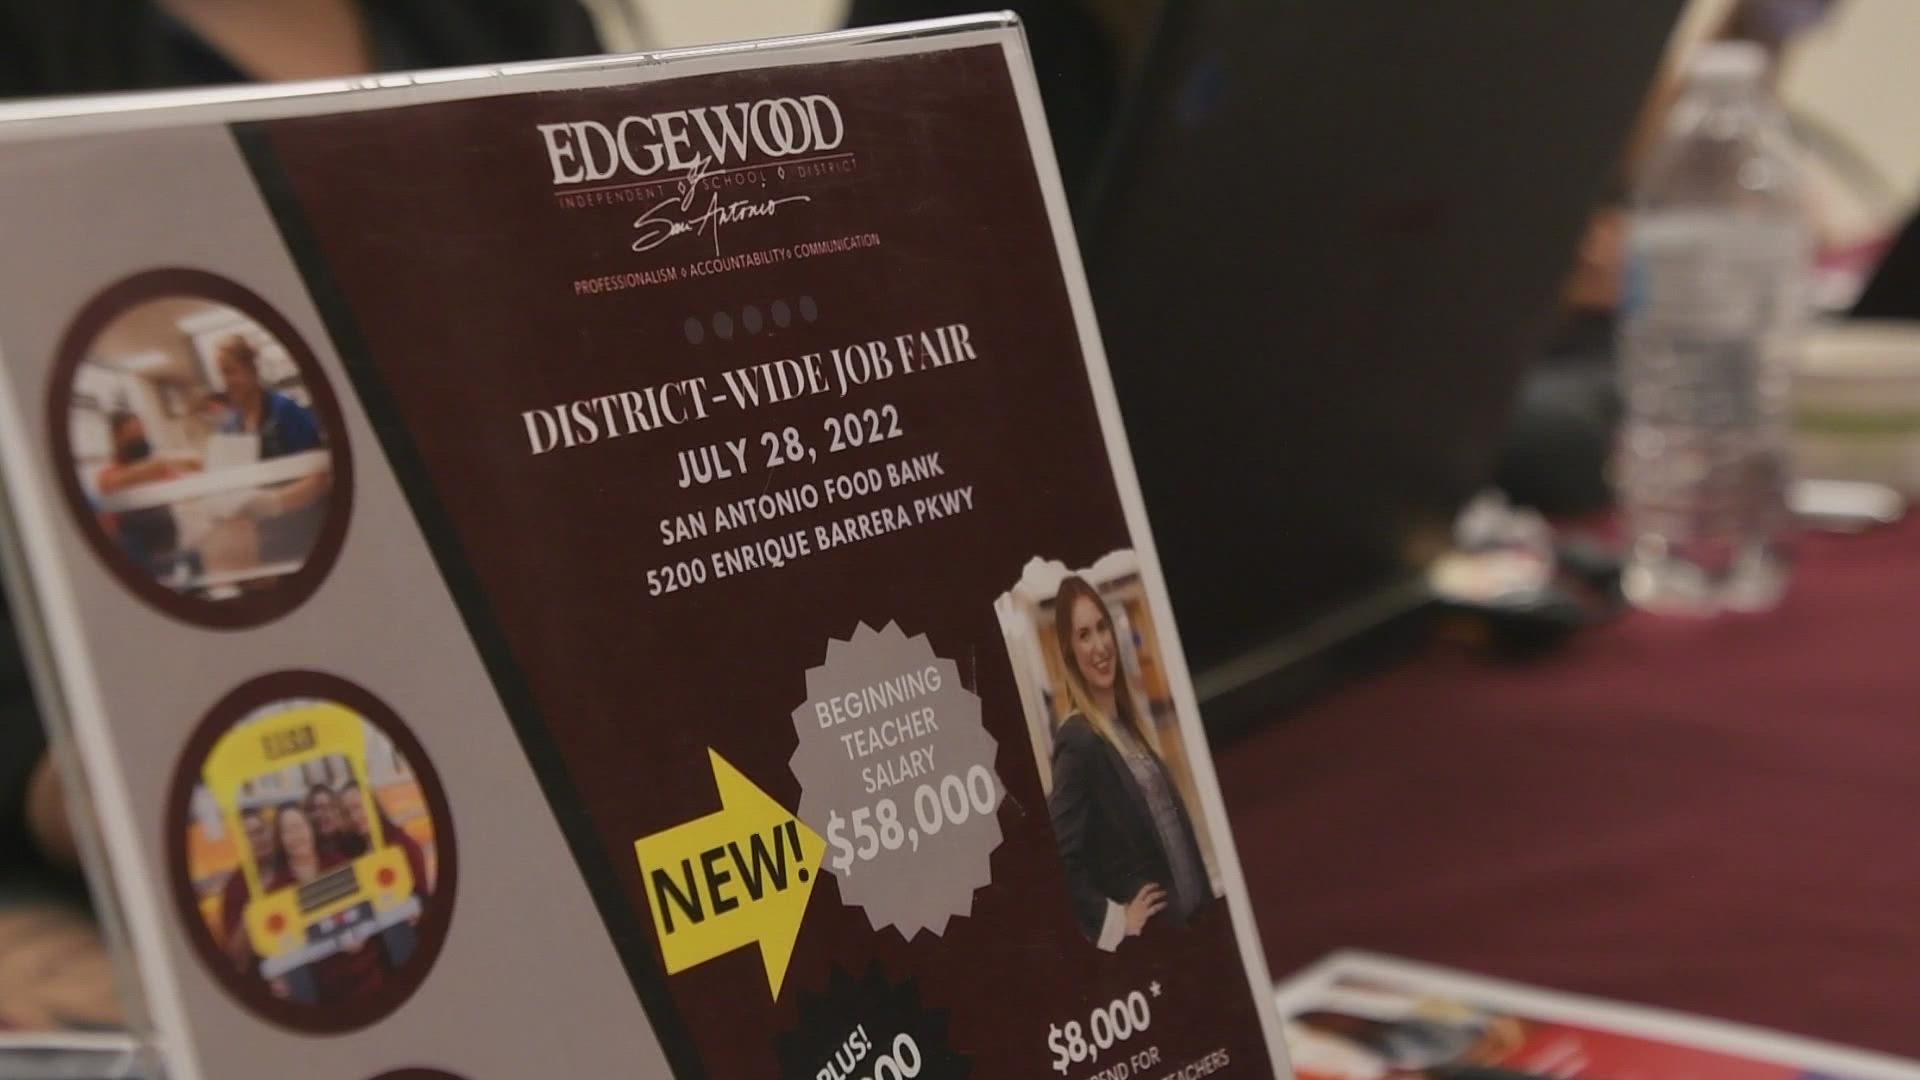 Edgewood ISD held a job fair ahead of the new school year